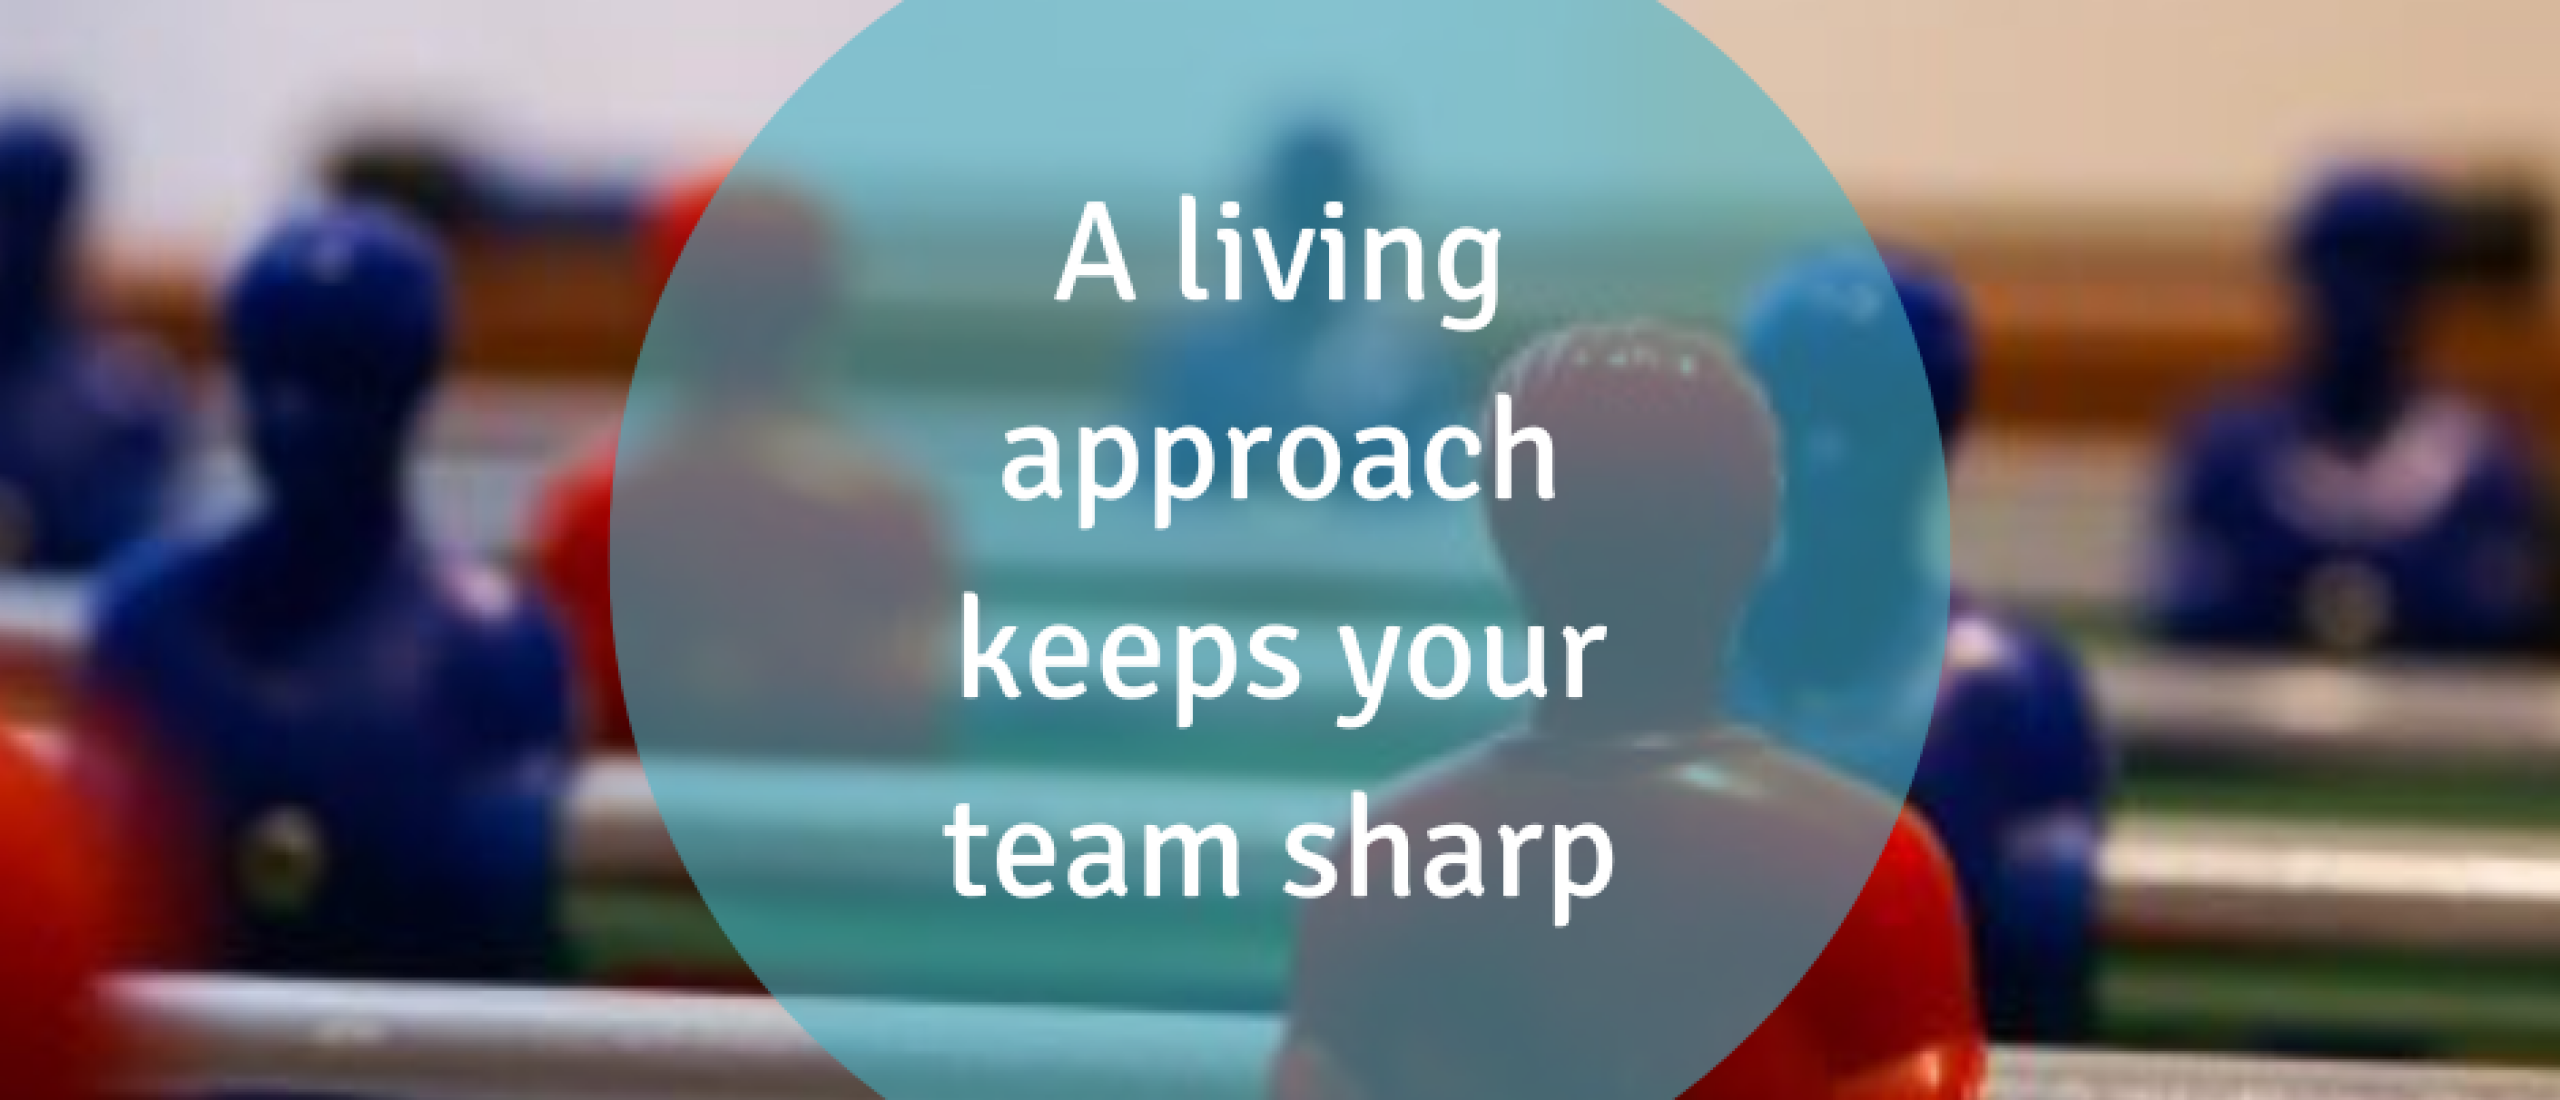 A living approach keeps your team sharp